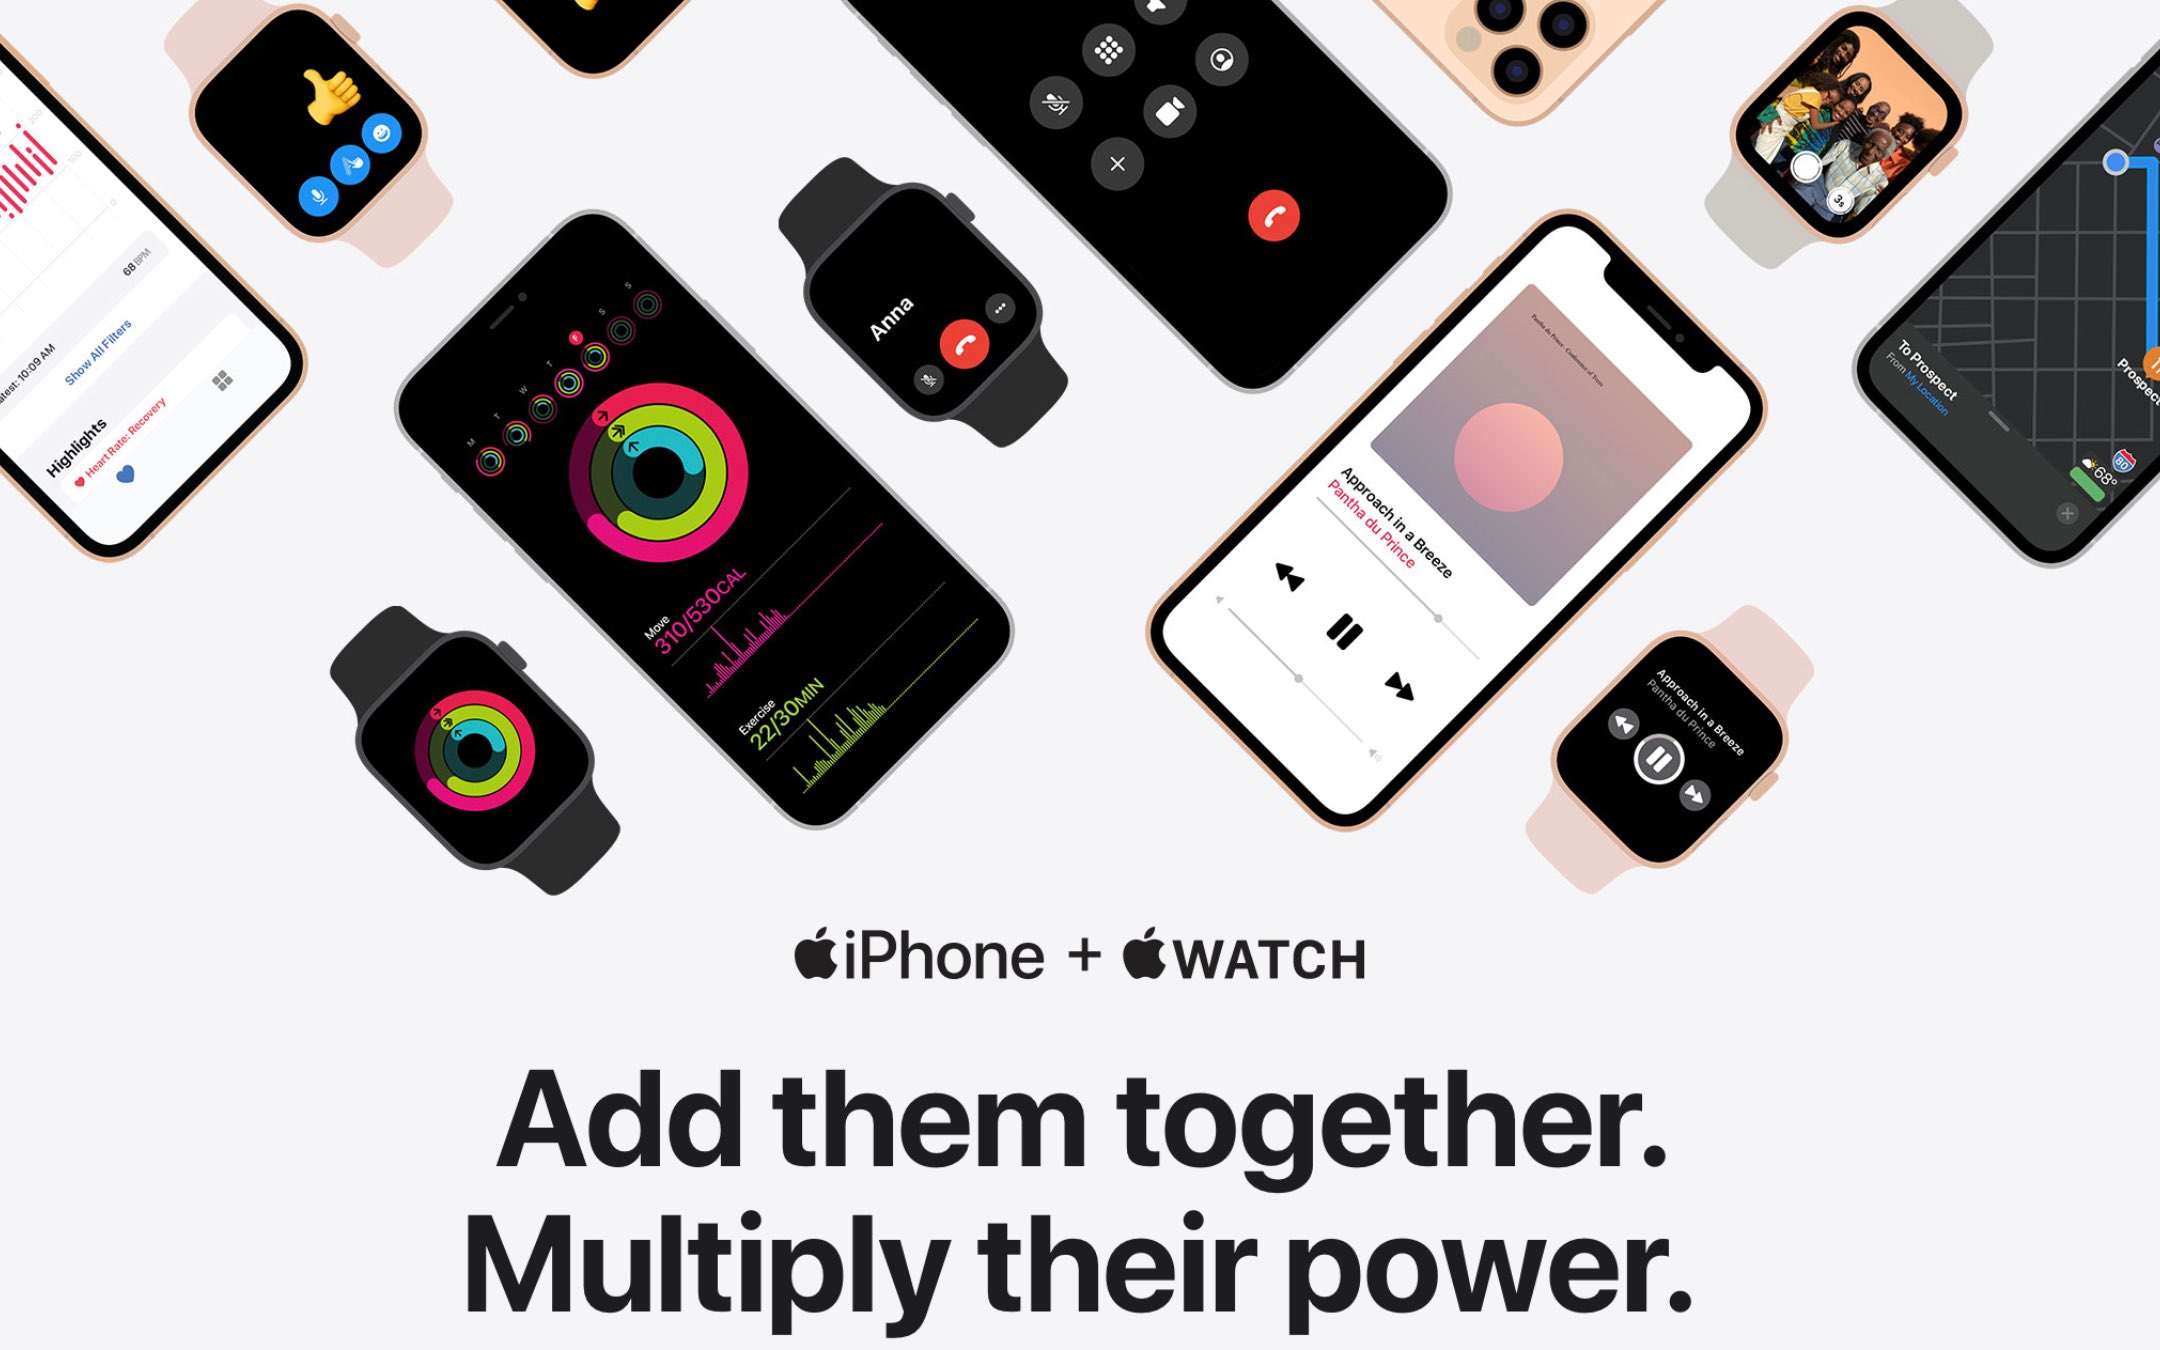 iPhone e Watch integrazione vincente, spiega Apple